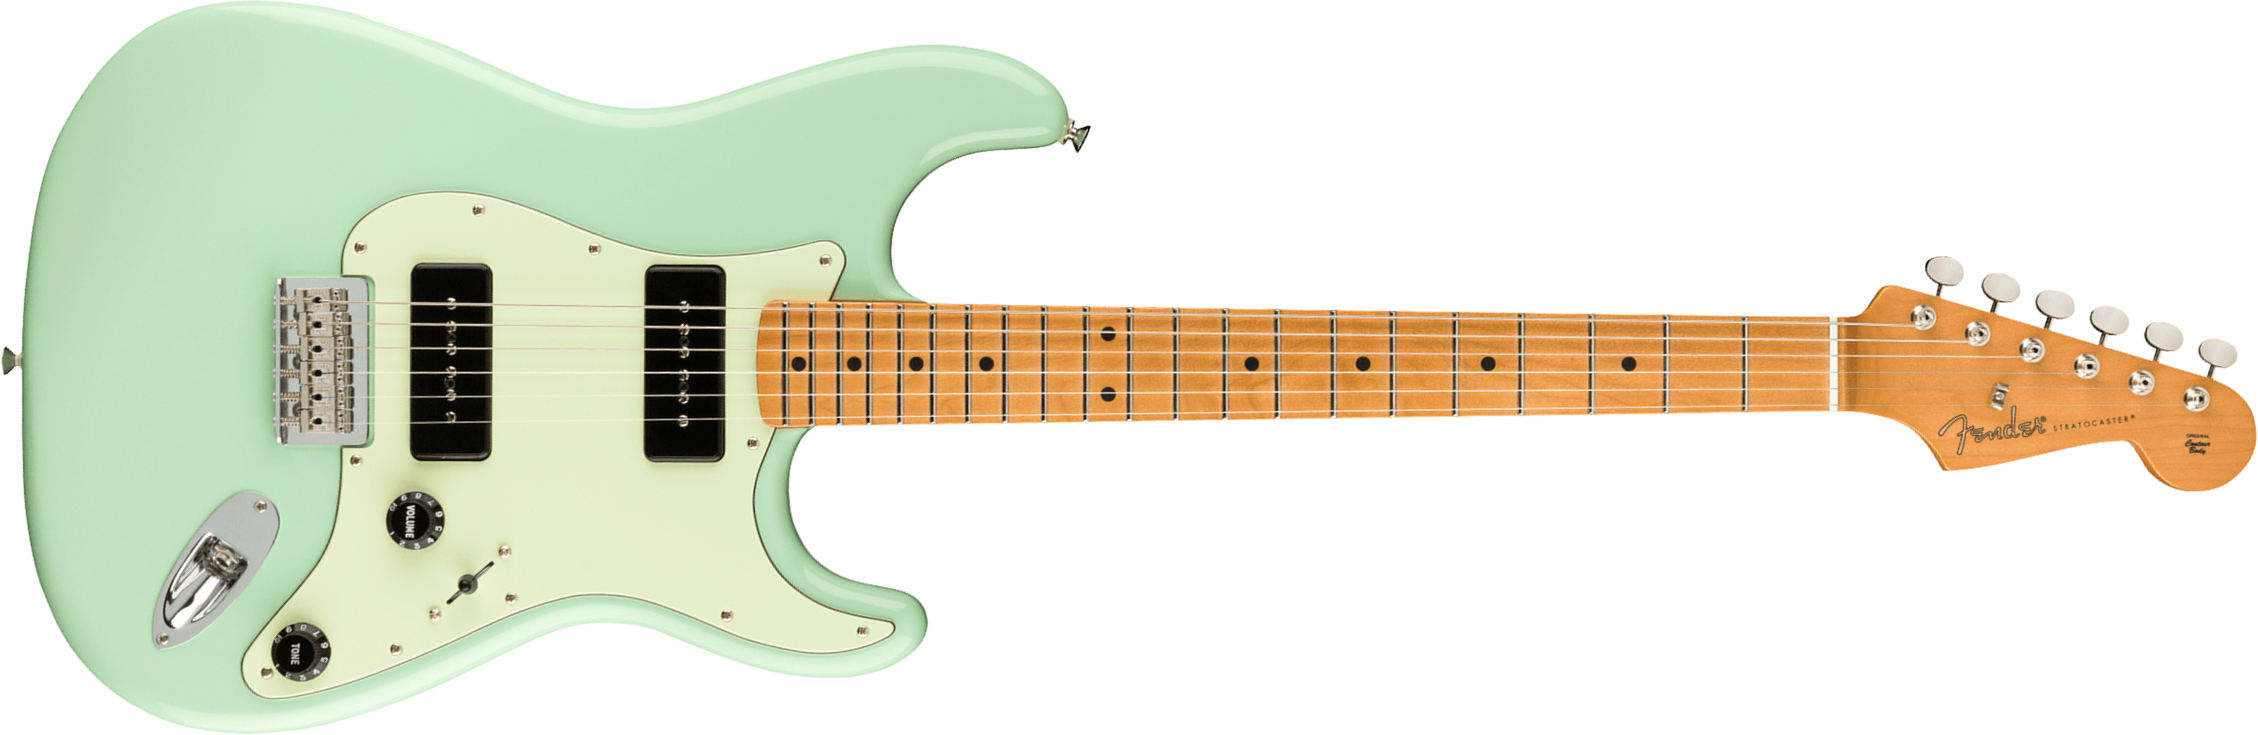 Fender Strat Noventa Mex Ss Ht Mn +housse - Surf Green - Str shape electric guitar - Main picture